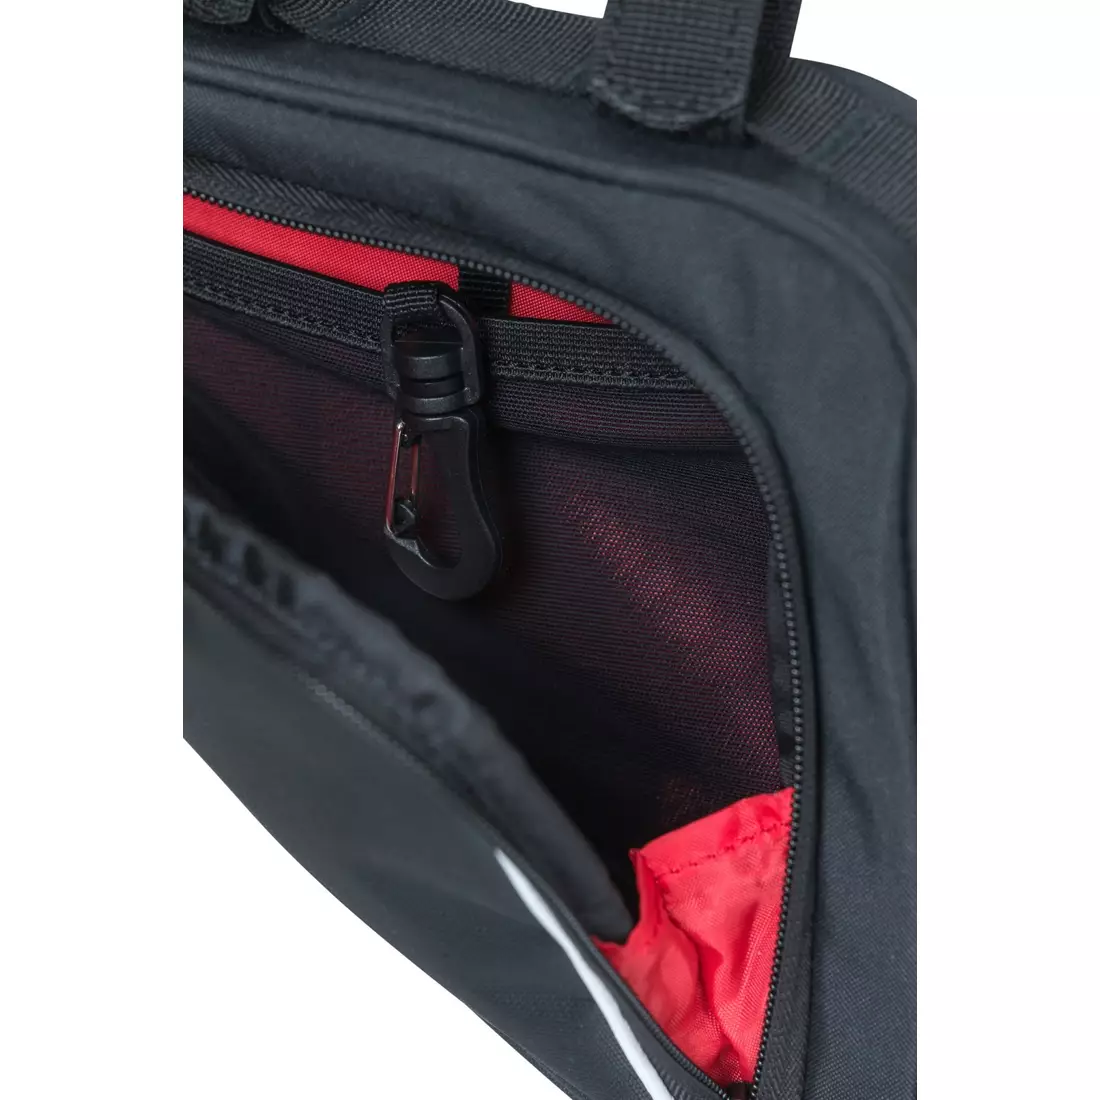 BASIL frame bag sport design triangle black B-18045